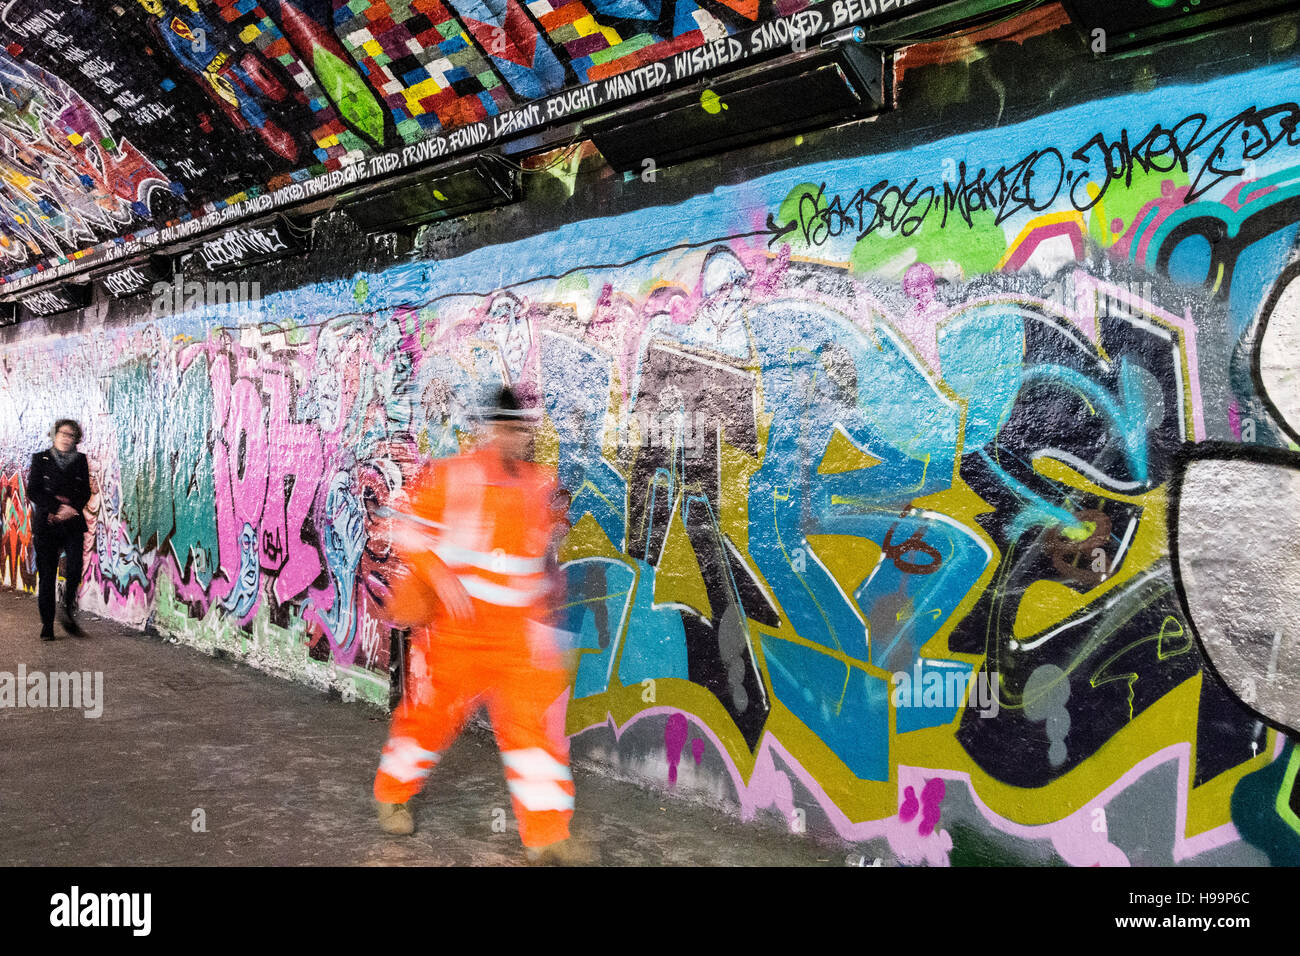 Leake Street, also known as Graffiti Tunnel, underneath Waterloo Train Station, Lambeth, London, SE1, UK. Stock Photo